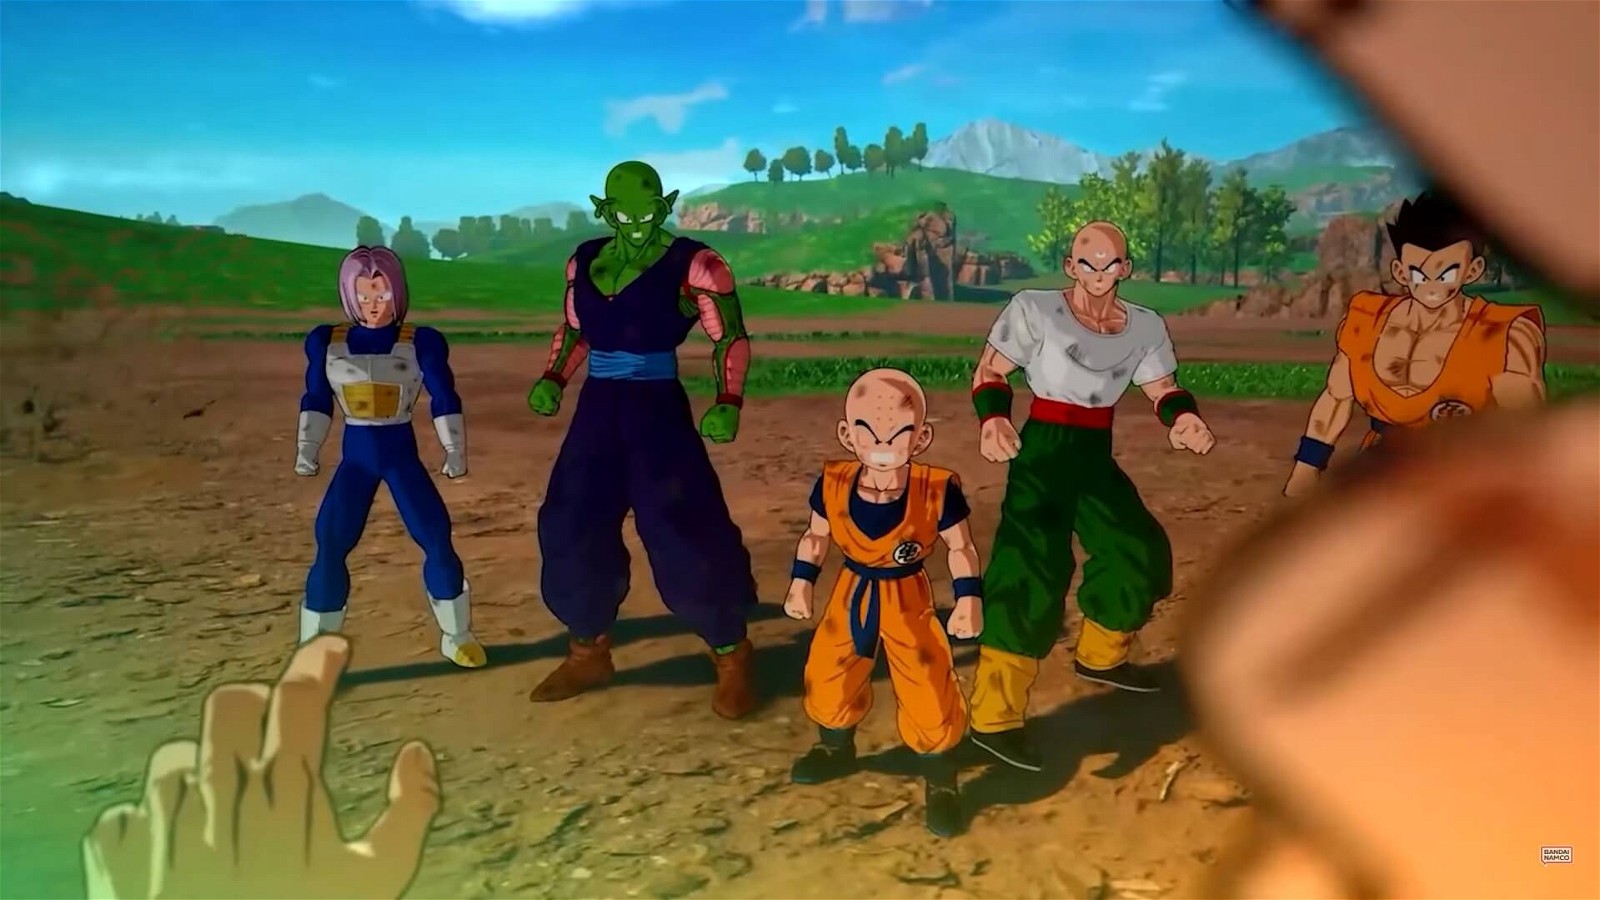 Piccolo is seen standing alongside Trunks, Krillin, Tien Shinhan, and Yamcha. Credits: Bandai Namco